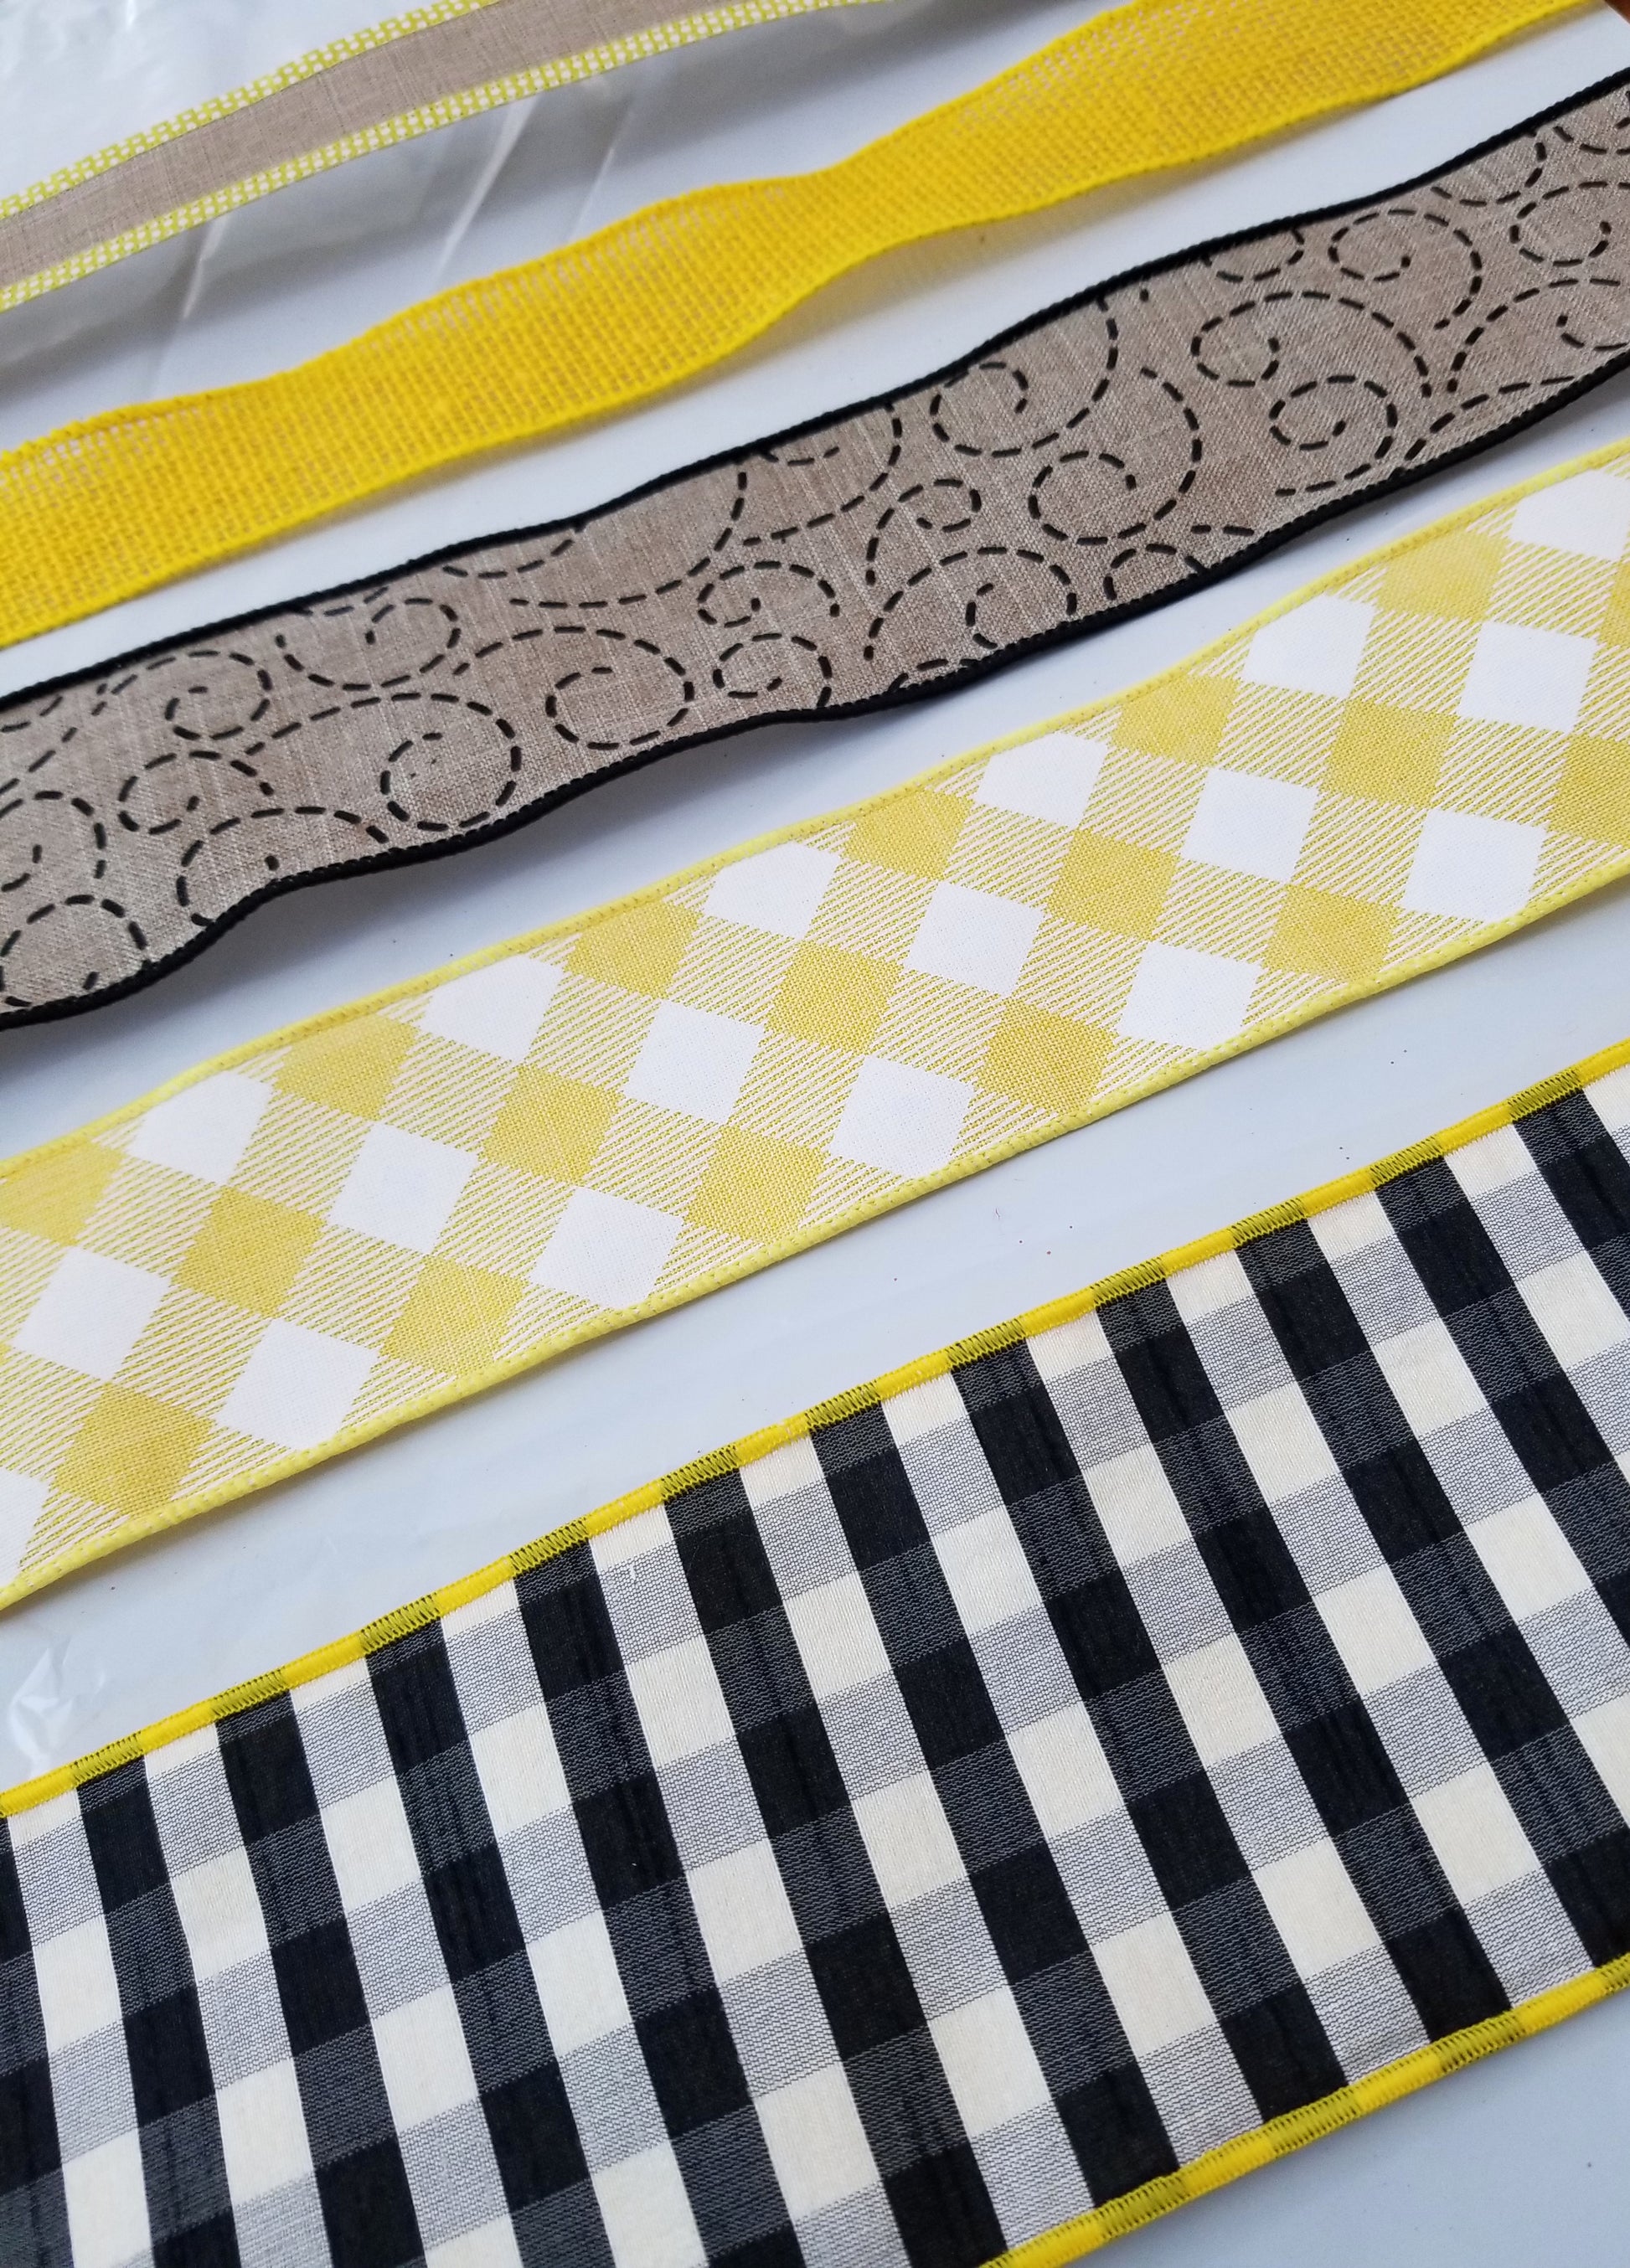 Black & Yellow DIY Bow Kit - Designer DIY